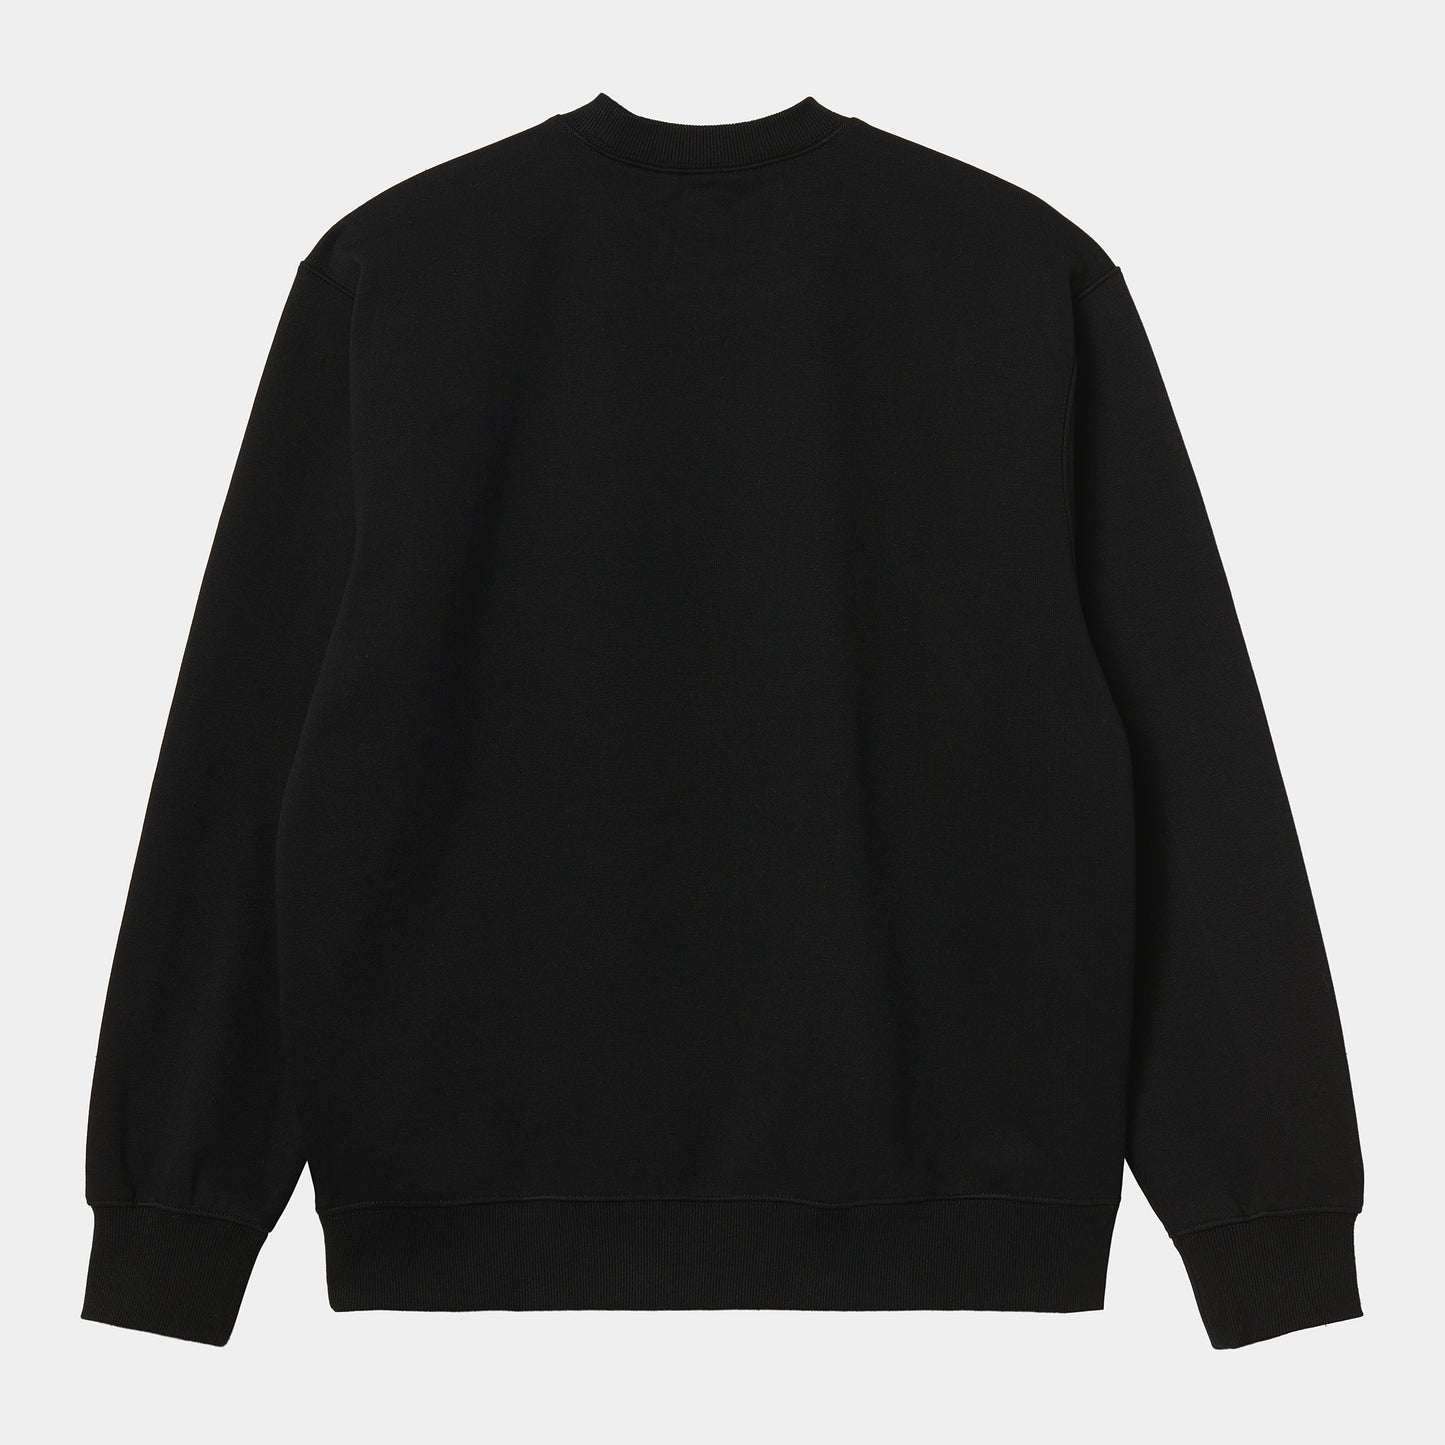 Carhartt WIP Carhartt Sweater Black/White